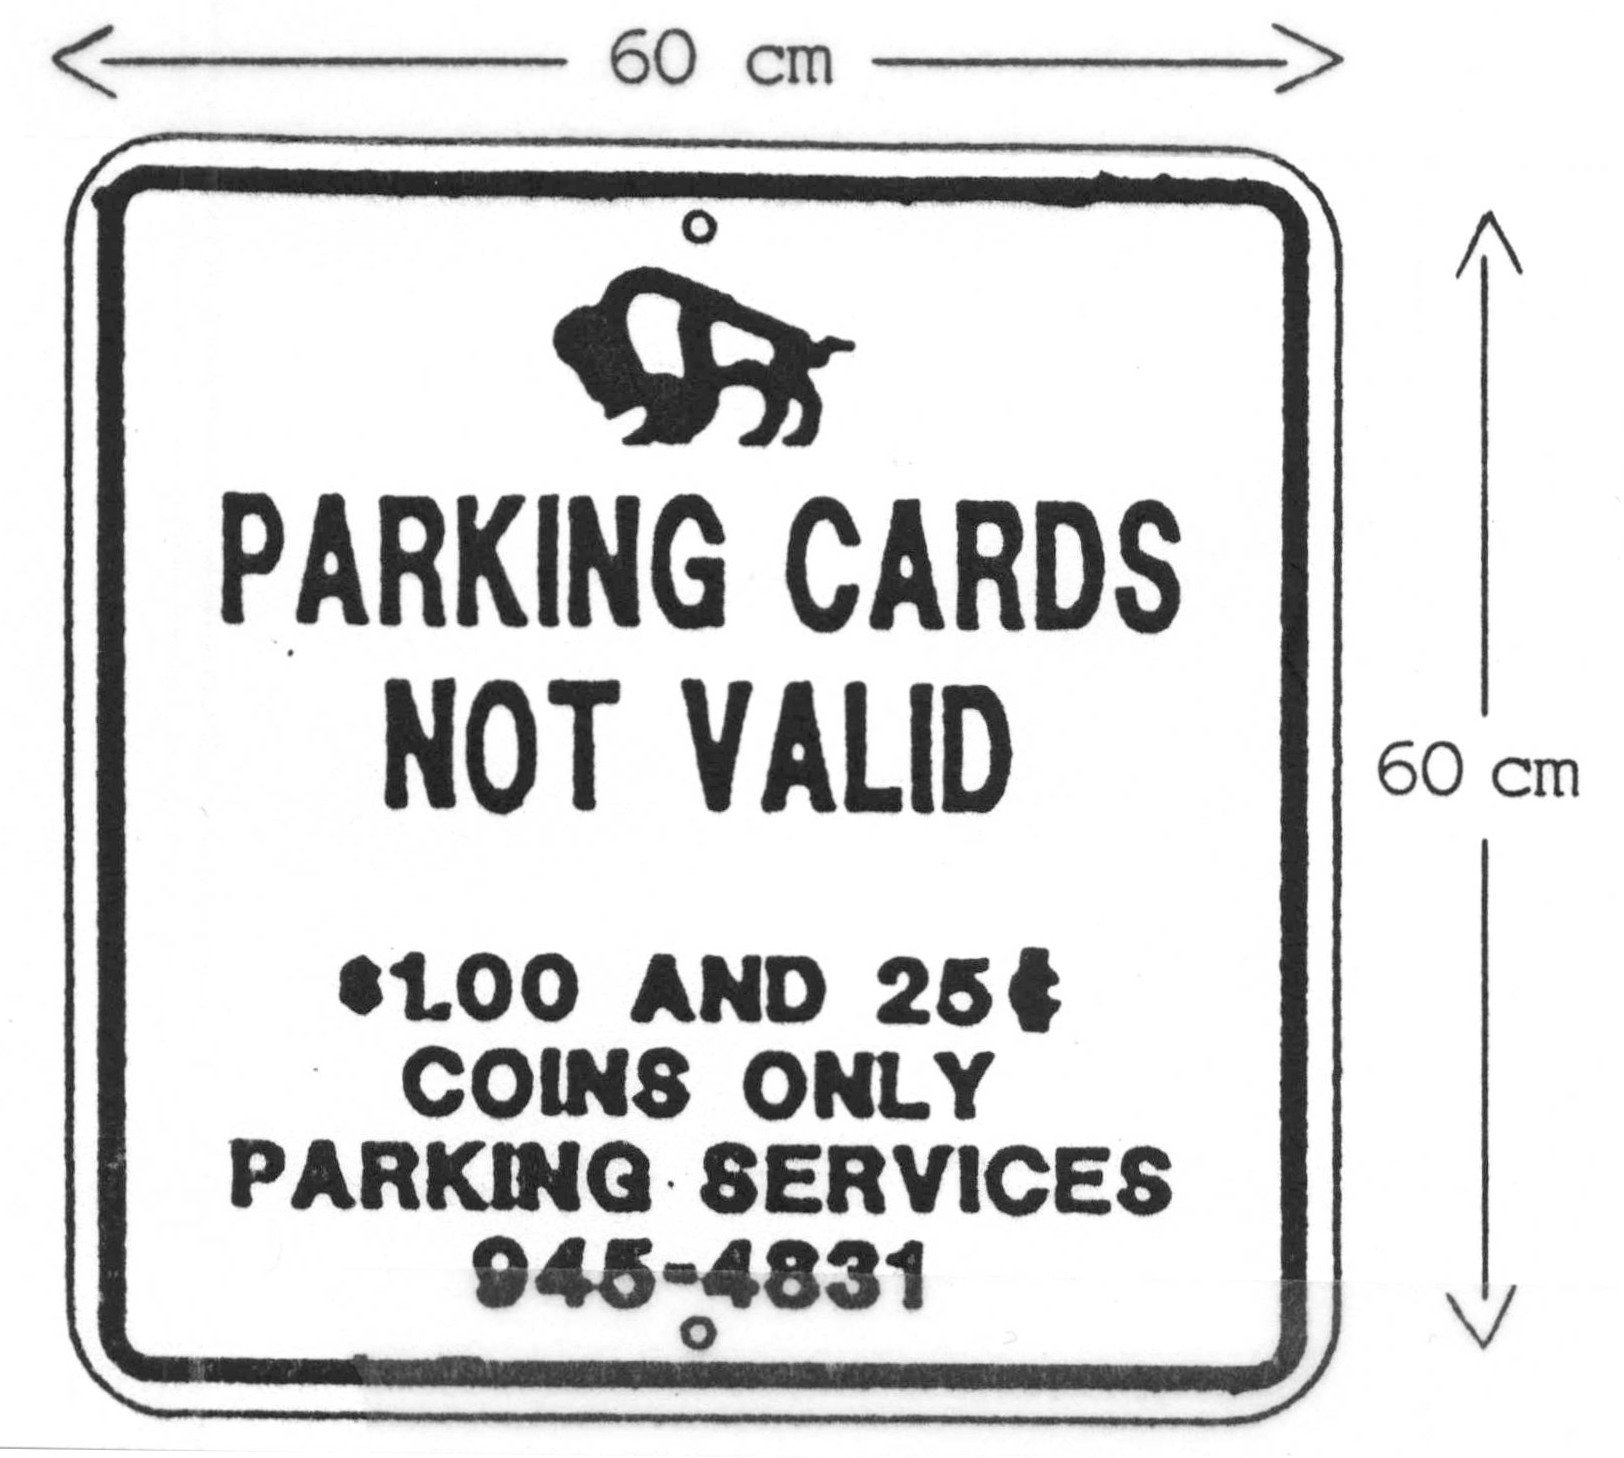 Sign: Parking meter